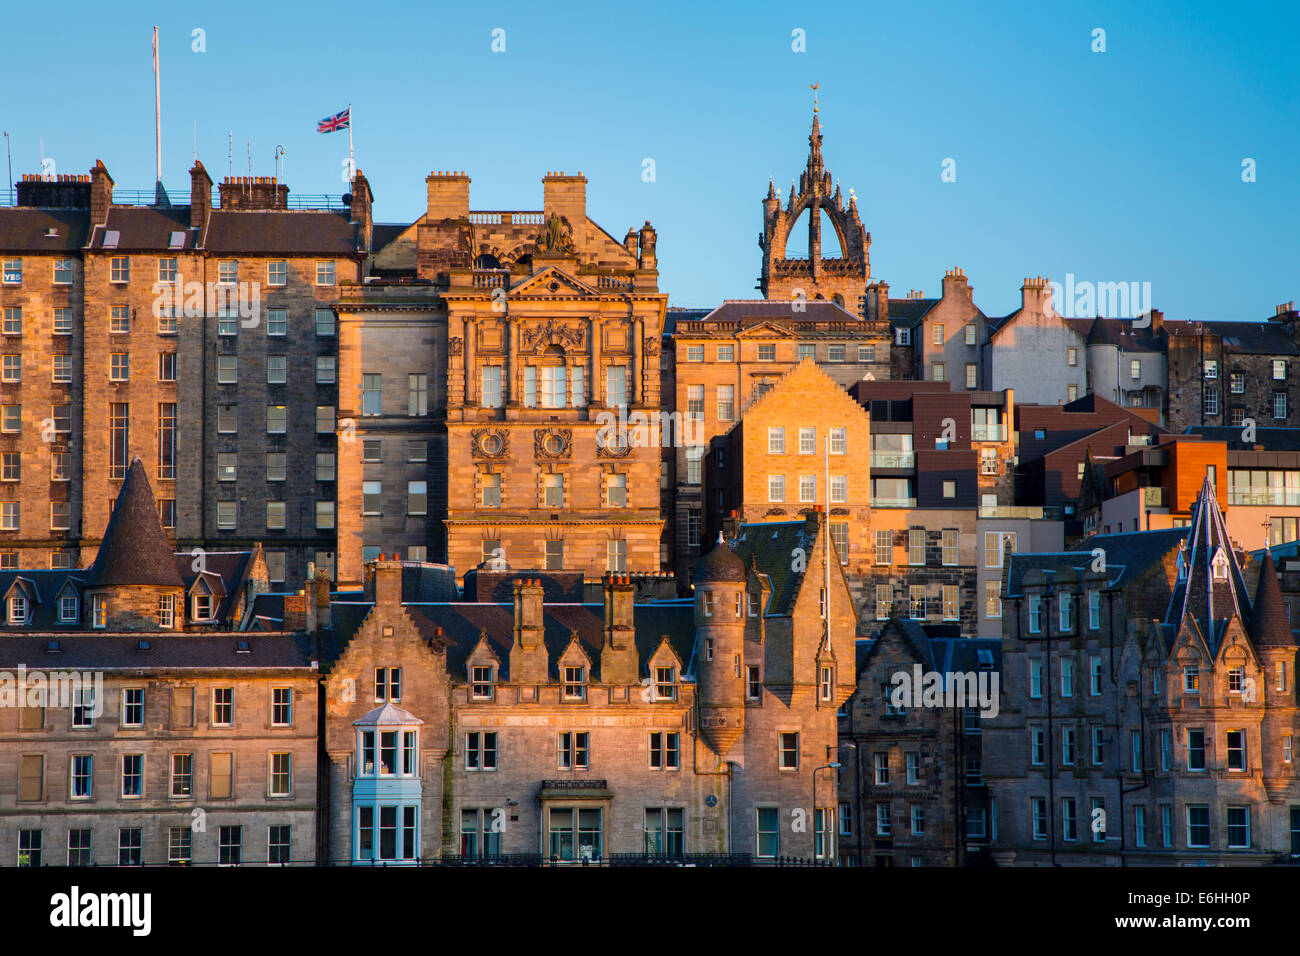 Setting sunlight on the old buildings of Edinburgh, Scotland Stock Photo